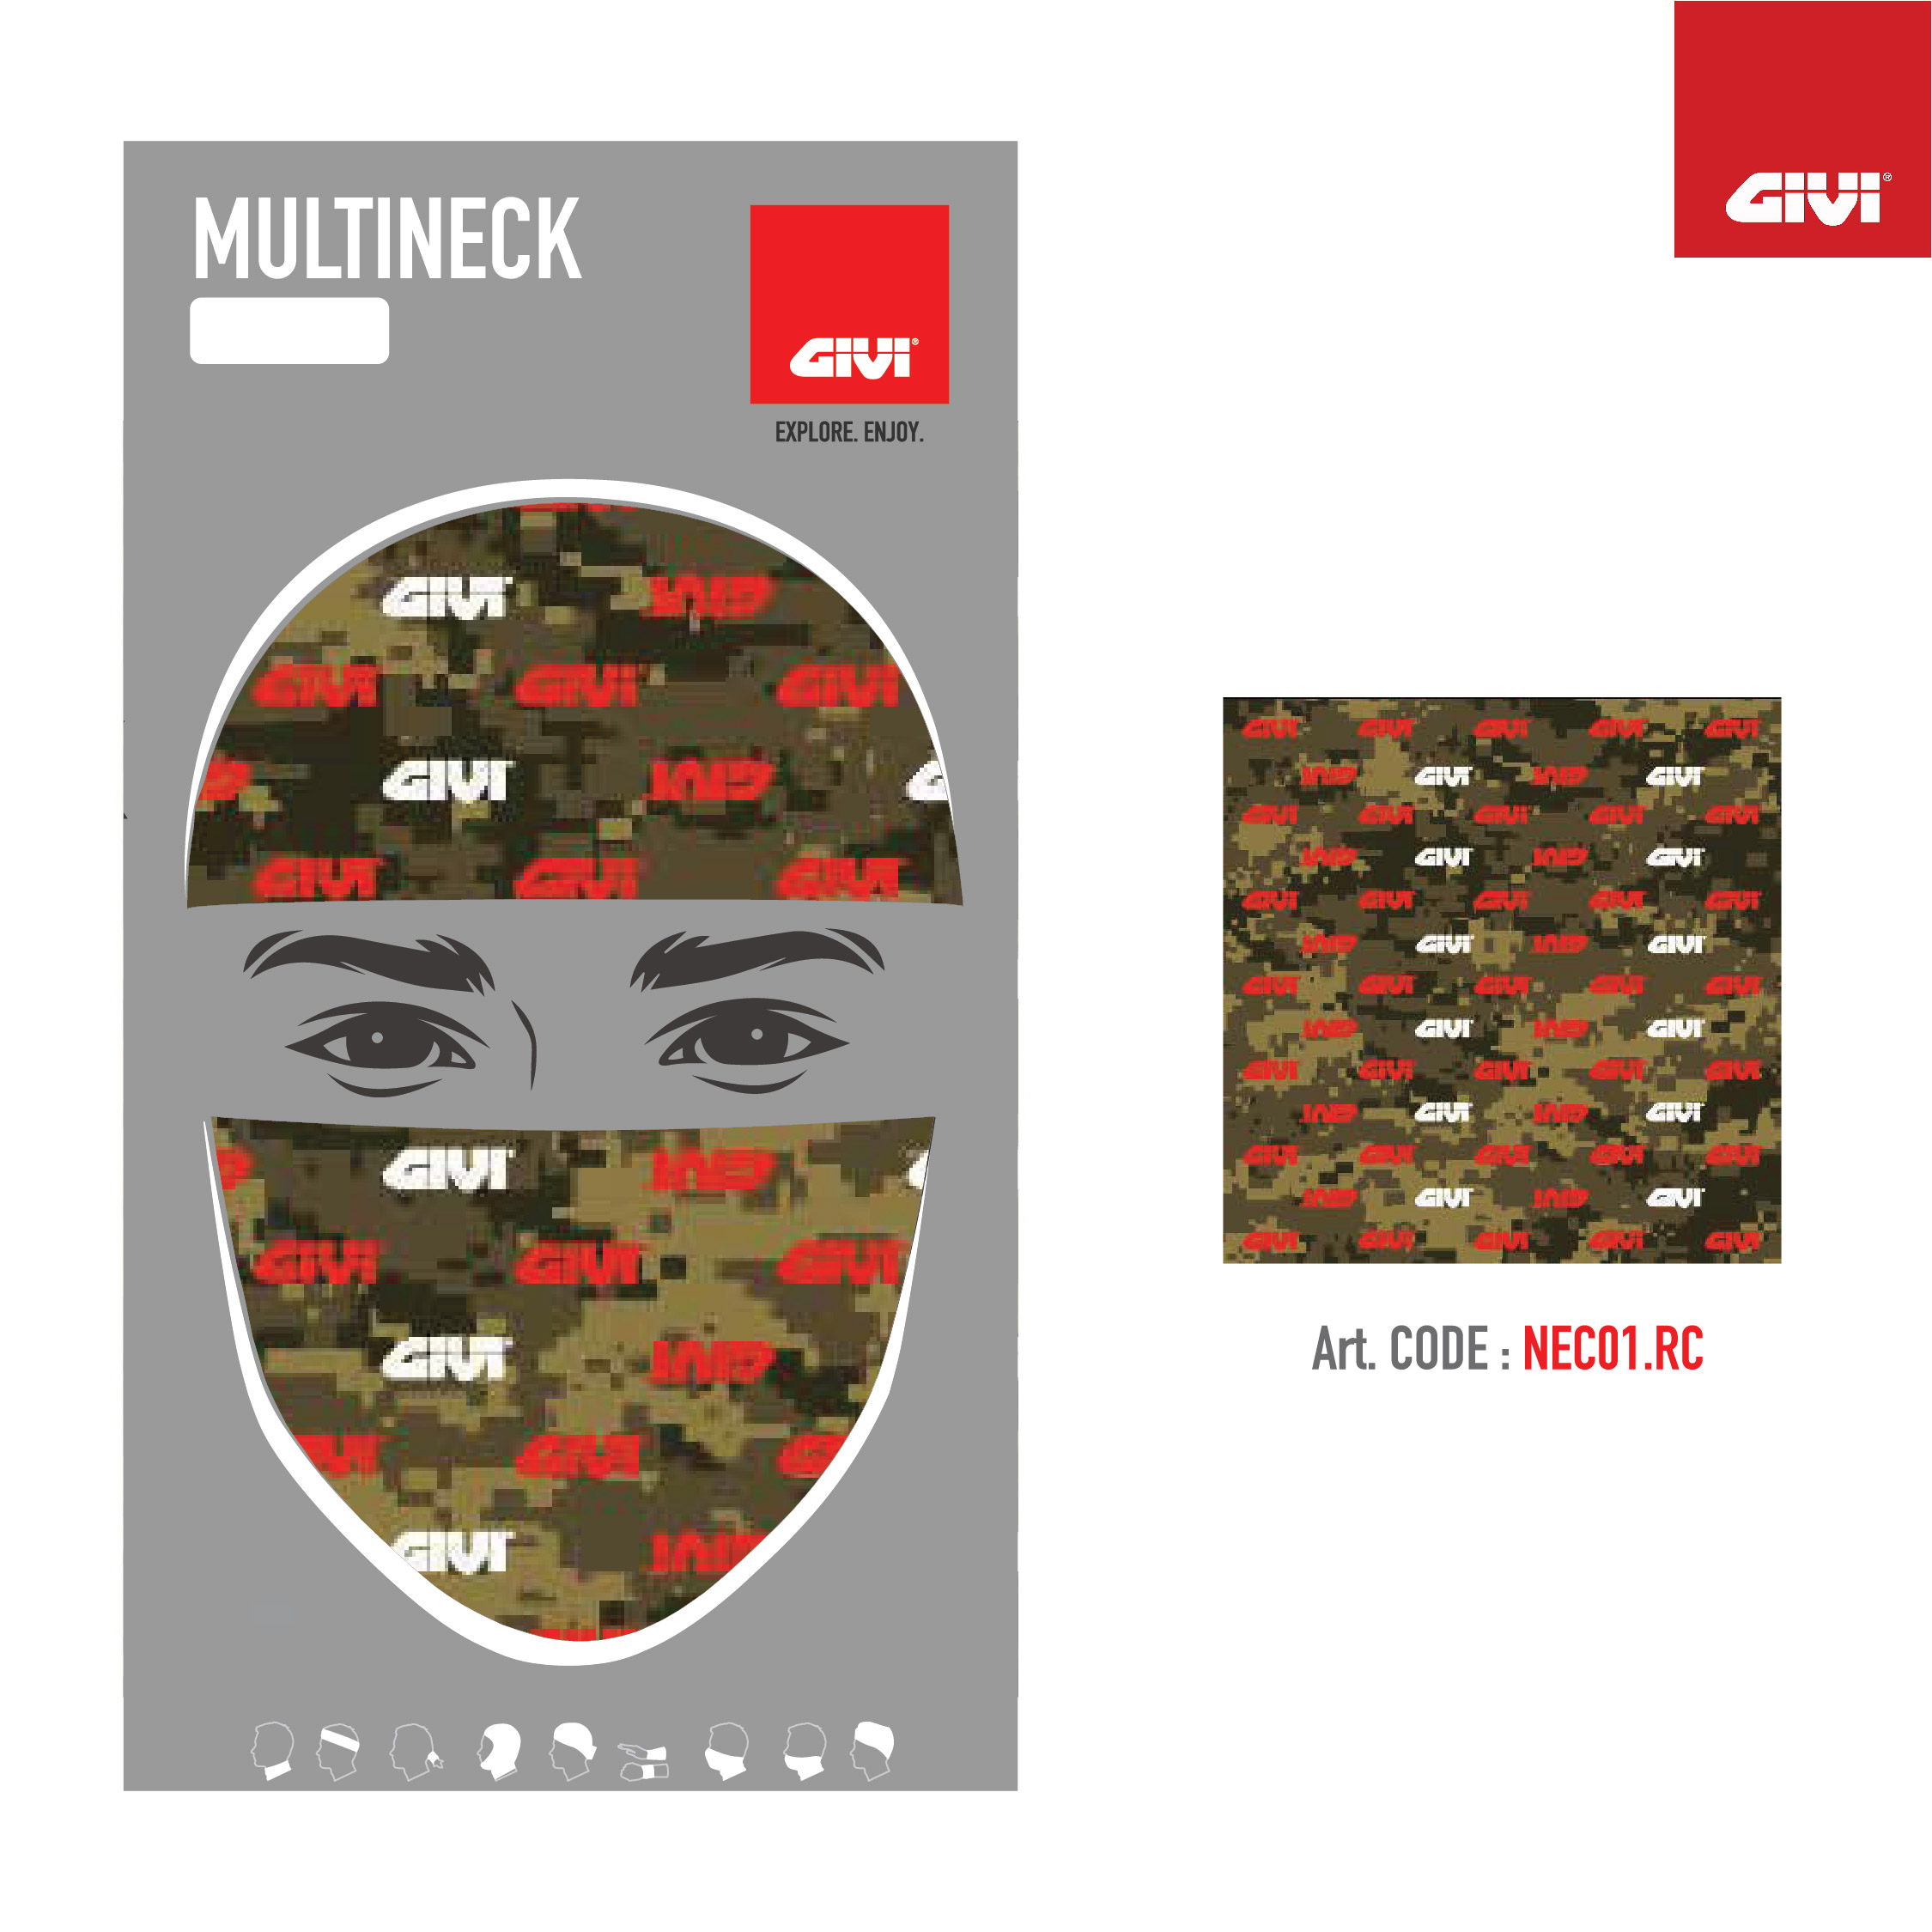 GIVI Multineck NEC01.RC - ผ้าบัฟ GIVI ลาย Brown Camo